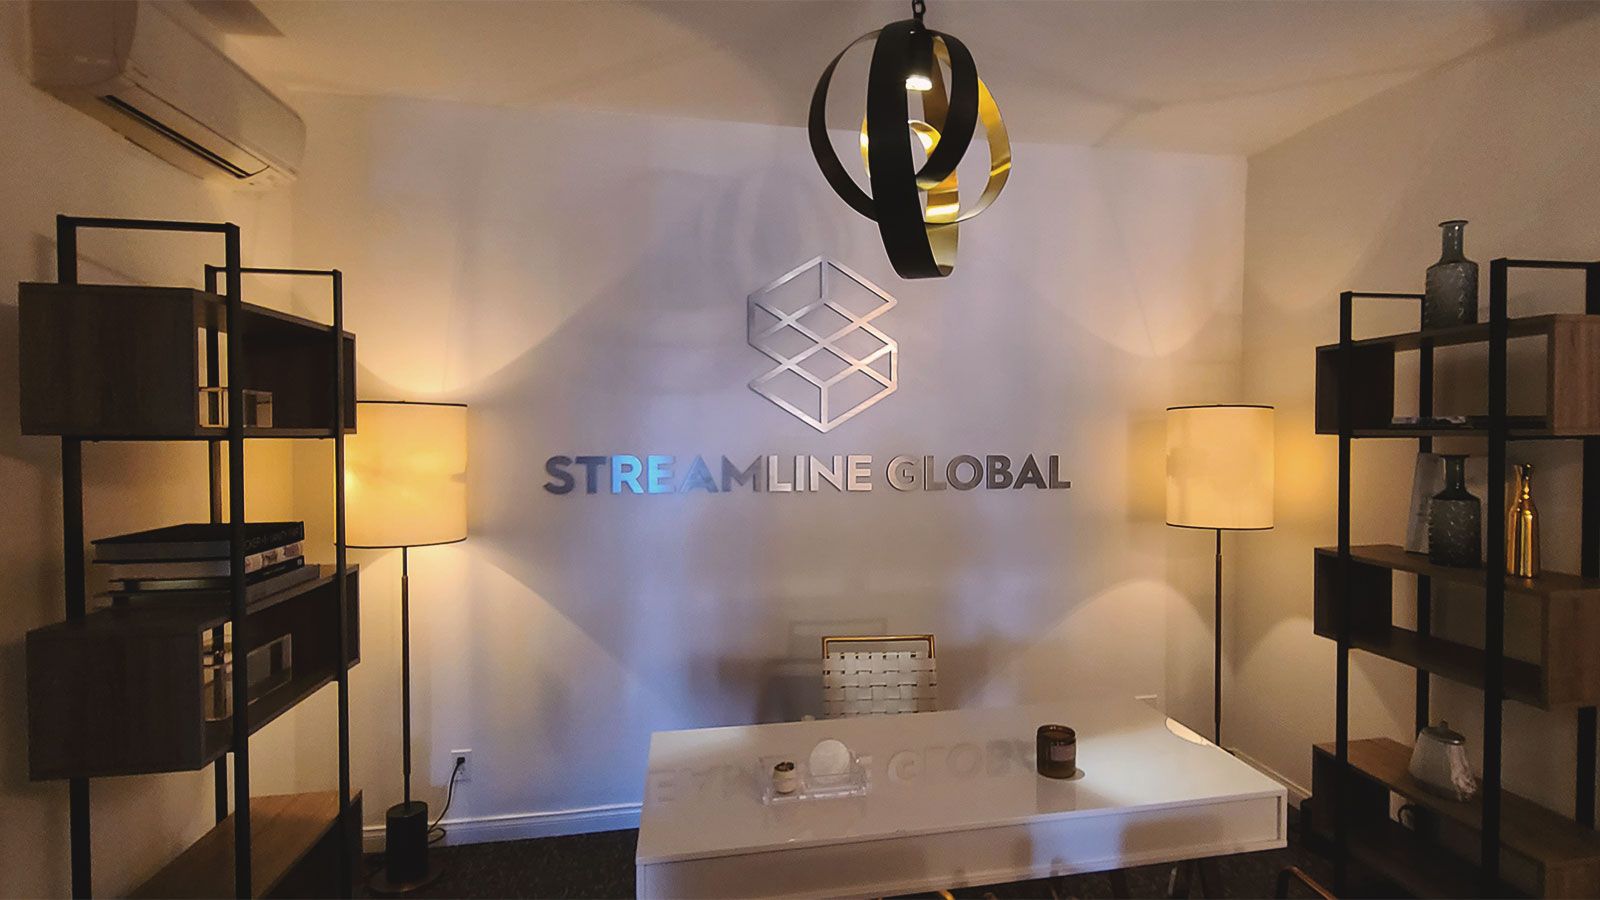 Streamline global office sign